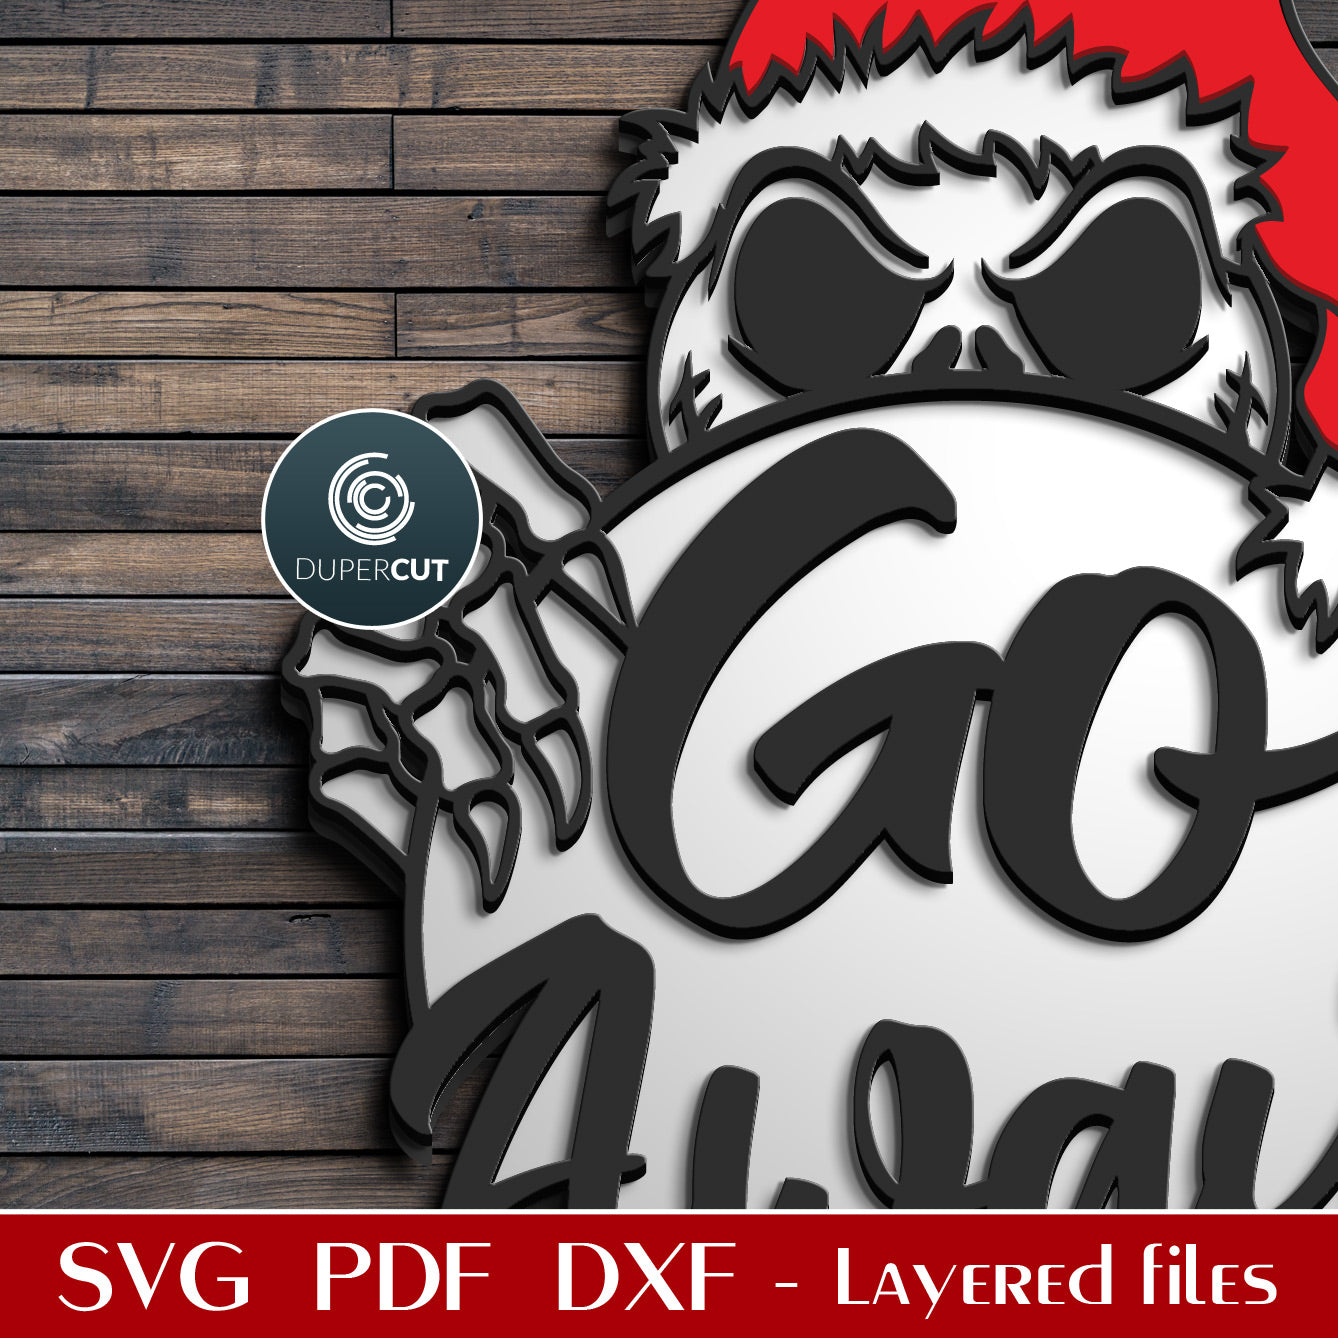 Jack Skellington funny door sign GO AWAY  - SVG DXF layered cutting files, scroll saw pattern, Glowforge, Cricut, Silhouette, CNC plasma machines by DuperCut